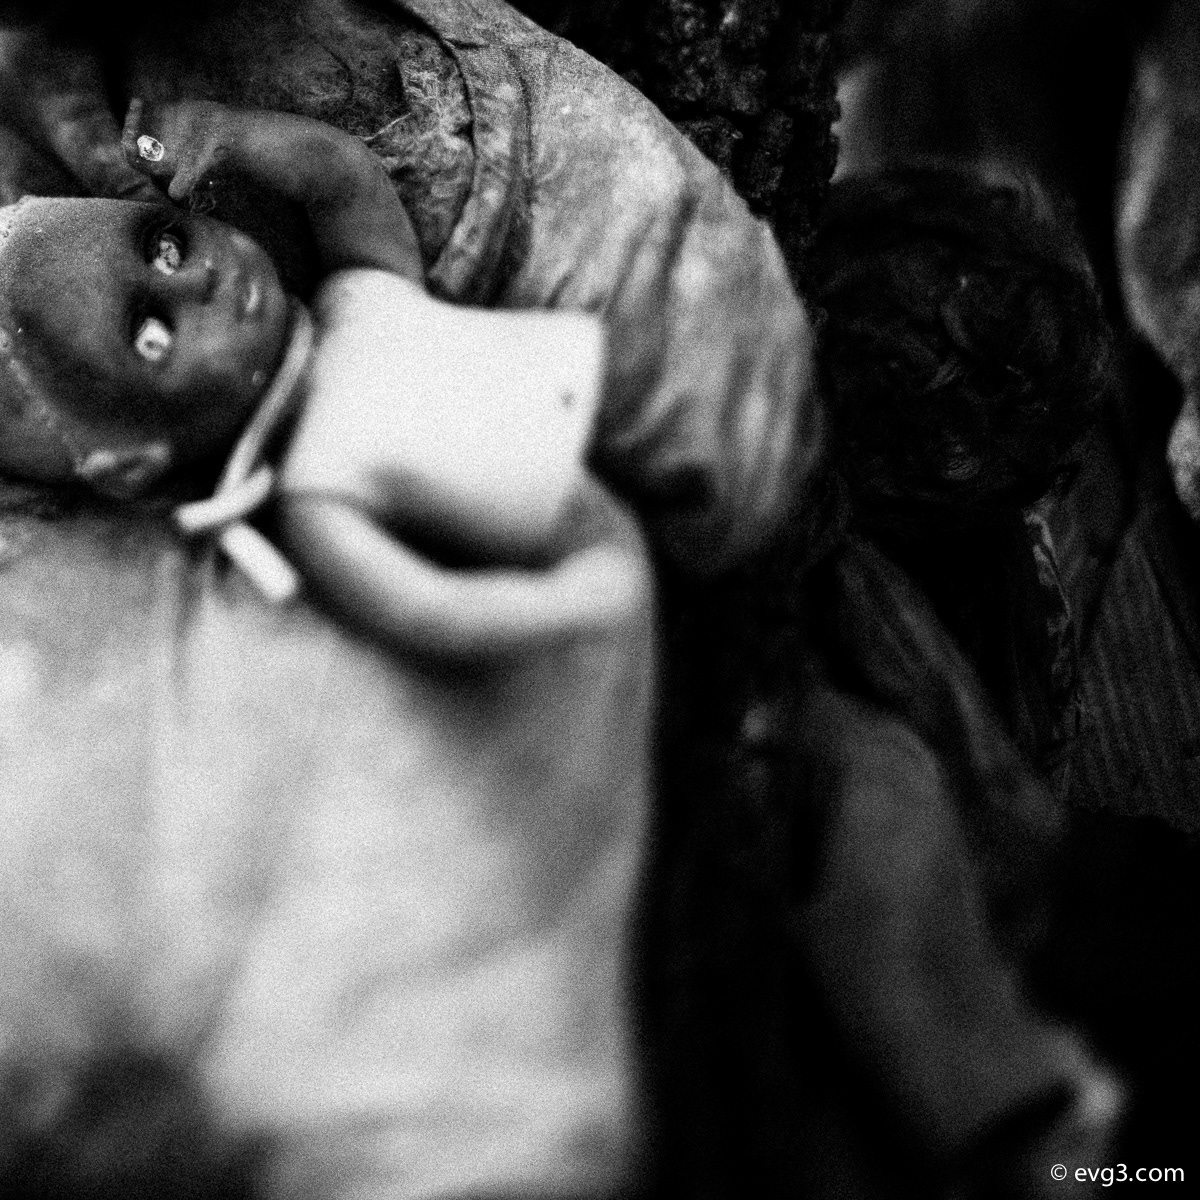 mexico Island dolls creepy art black and white